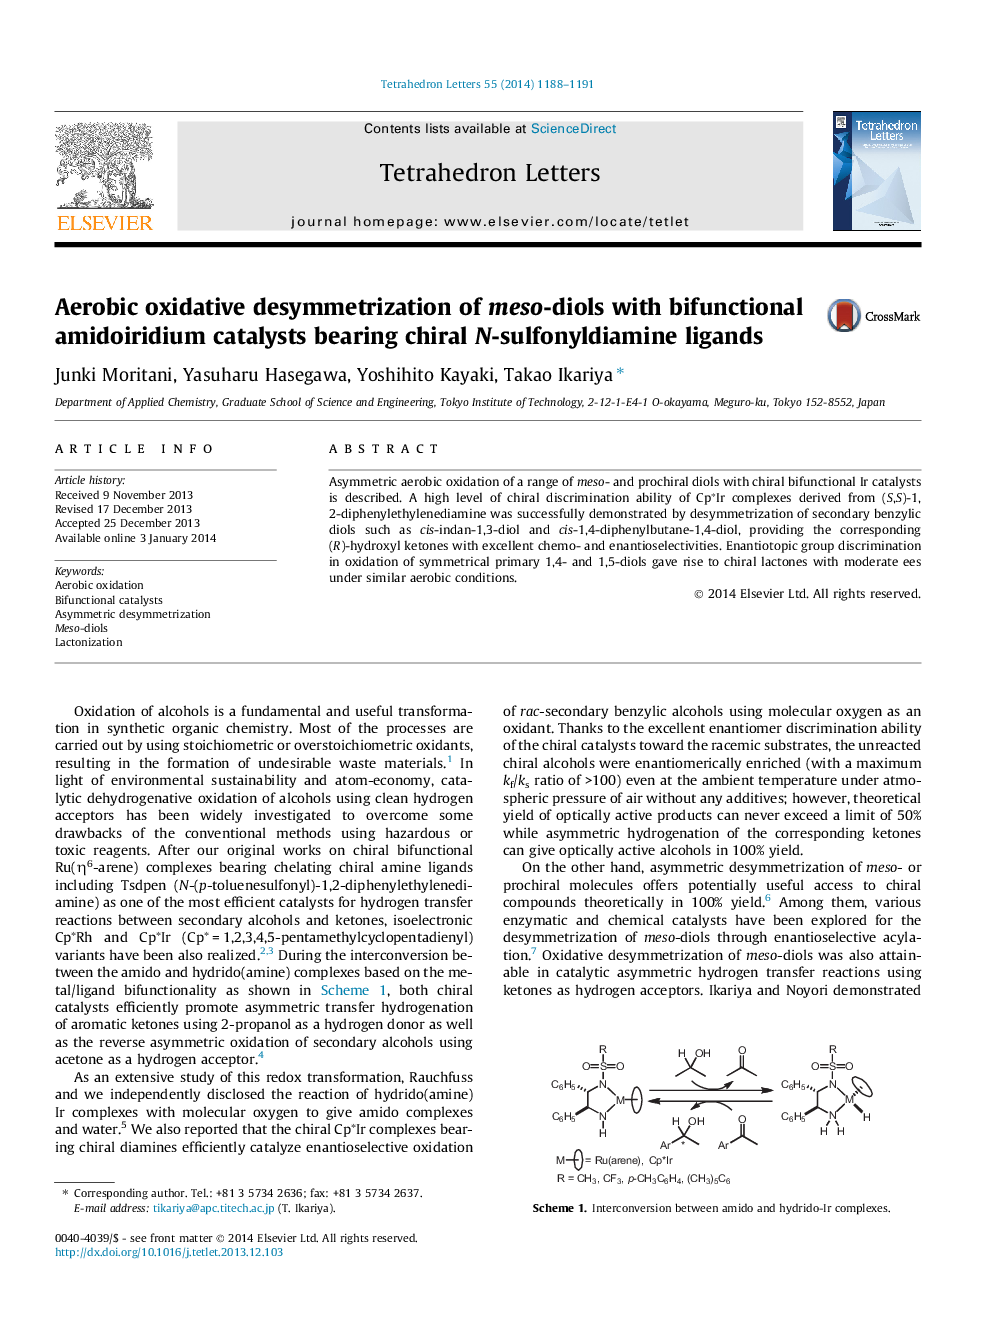 Aerobic oxidative desymmetrization of meso-diols with bifunctional amidoiridium catalysts bearing chiral N-sulfonyldiamine ligands